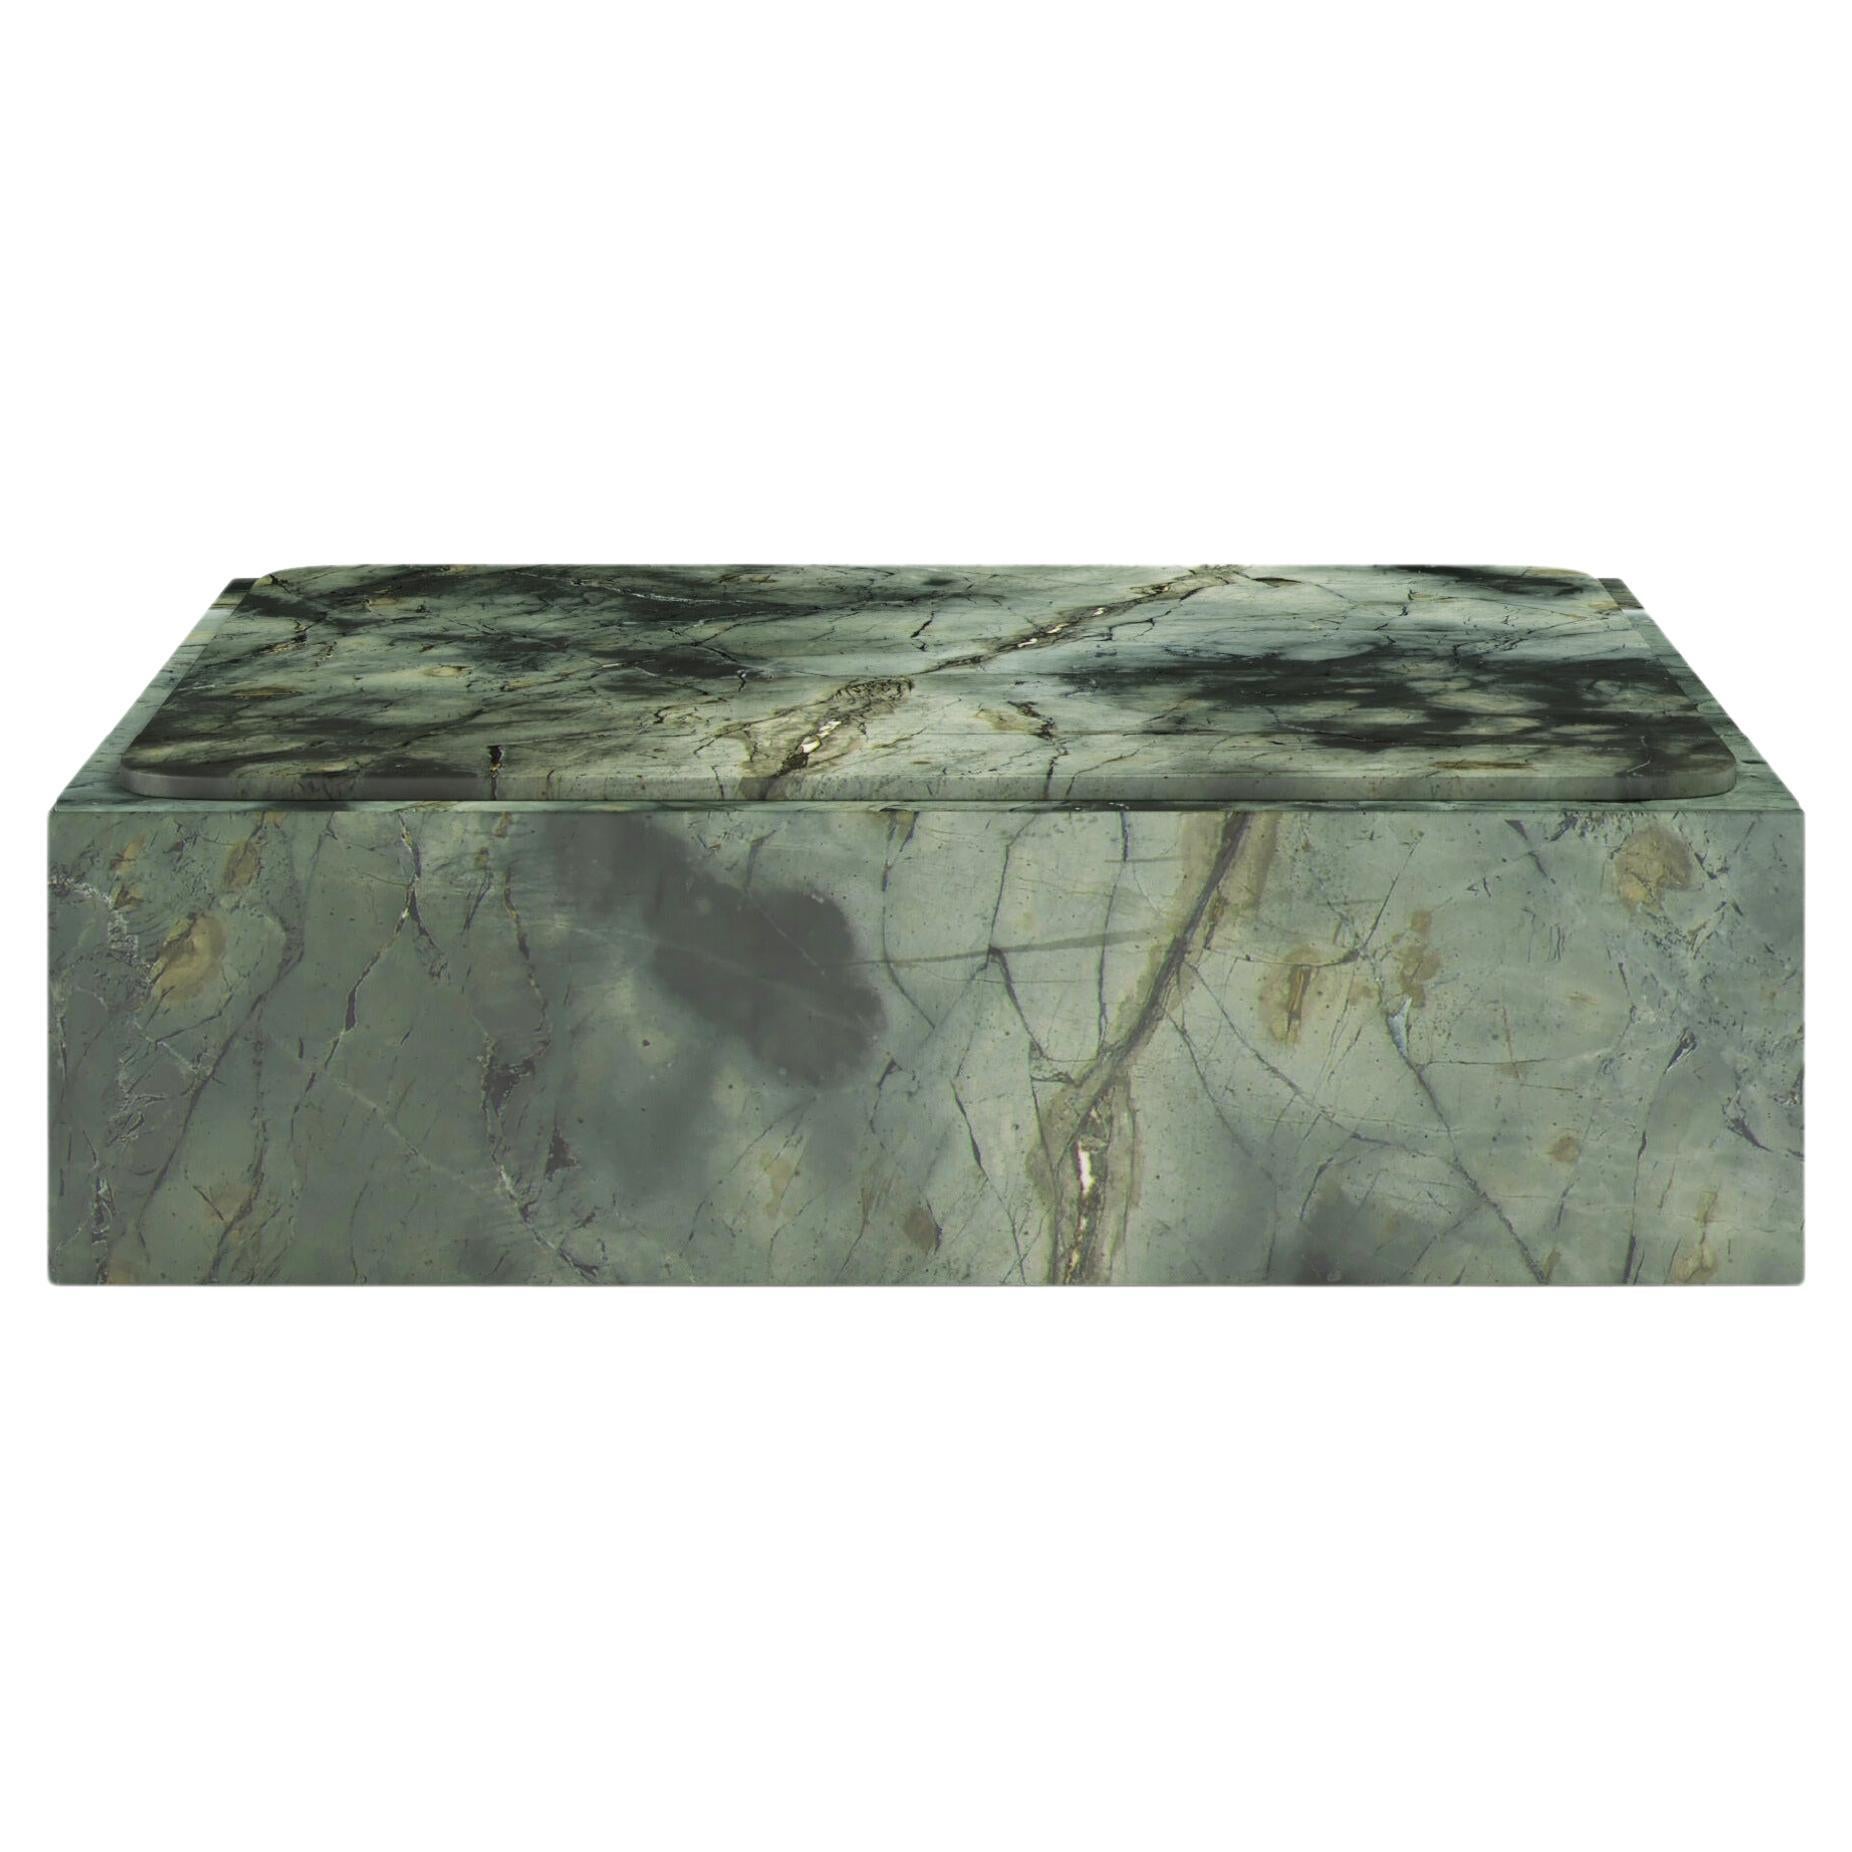 FORM(LA) Cubo Square Plinth Coffee Table 54”L x 54”W x 13”H Edinburgh Marble For Sale